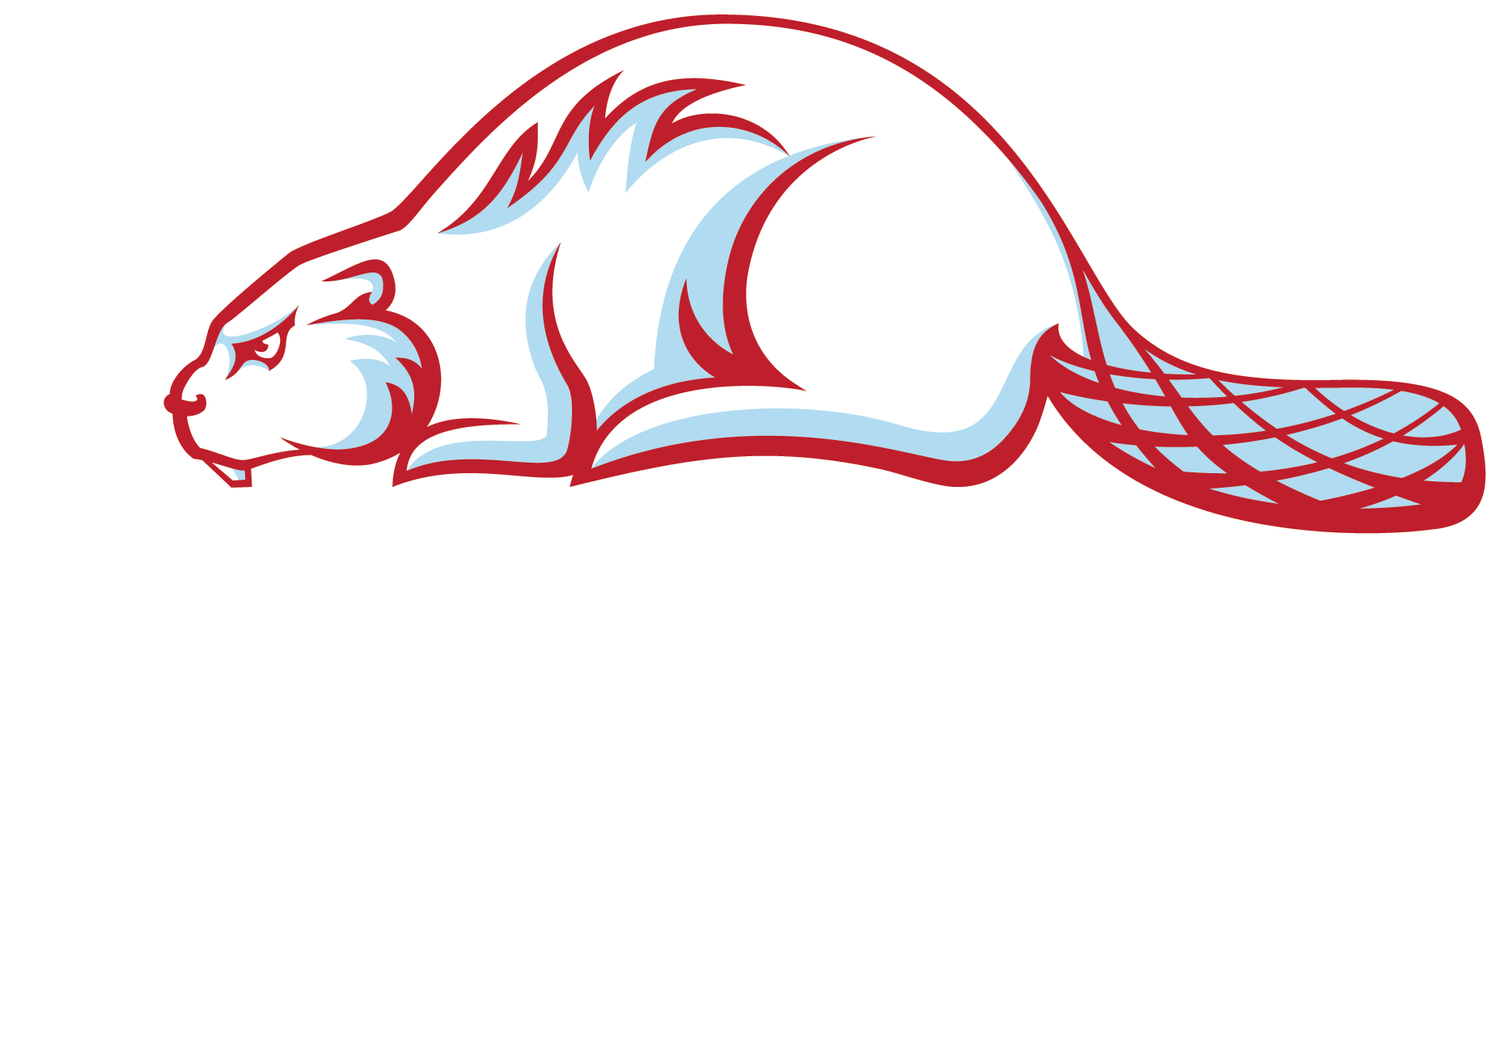 Canucks Rugby Club